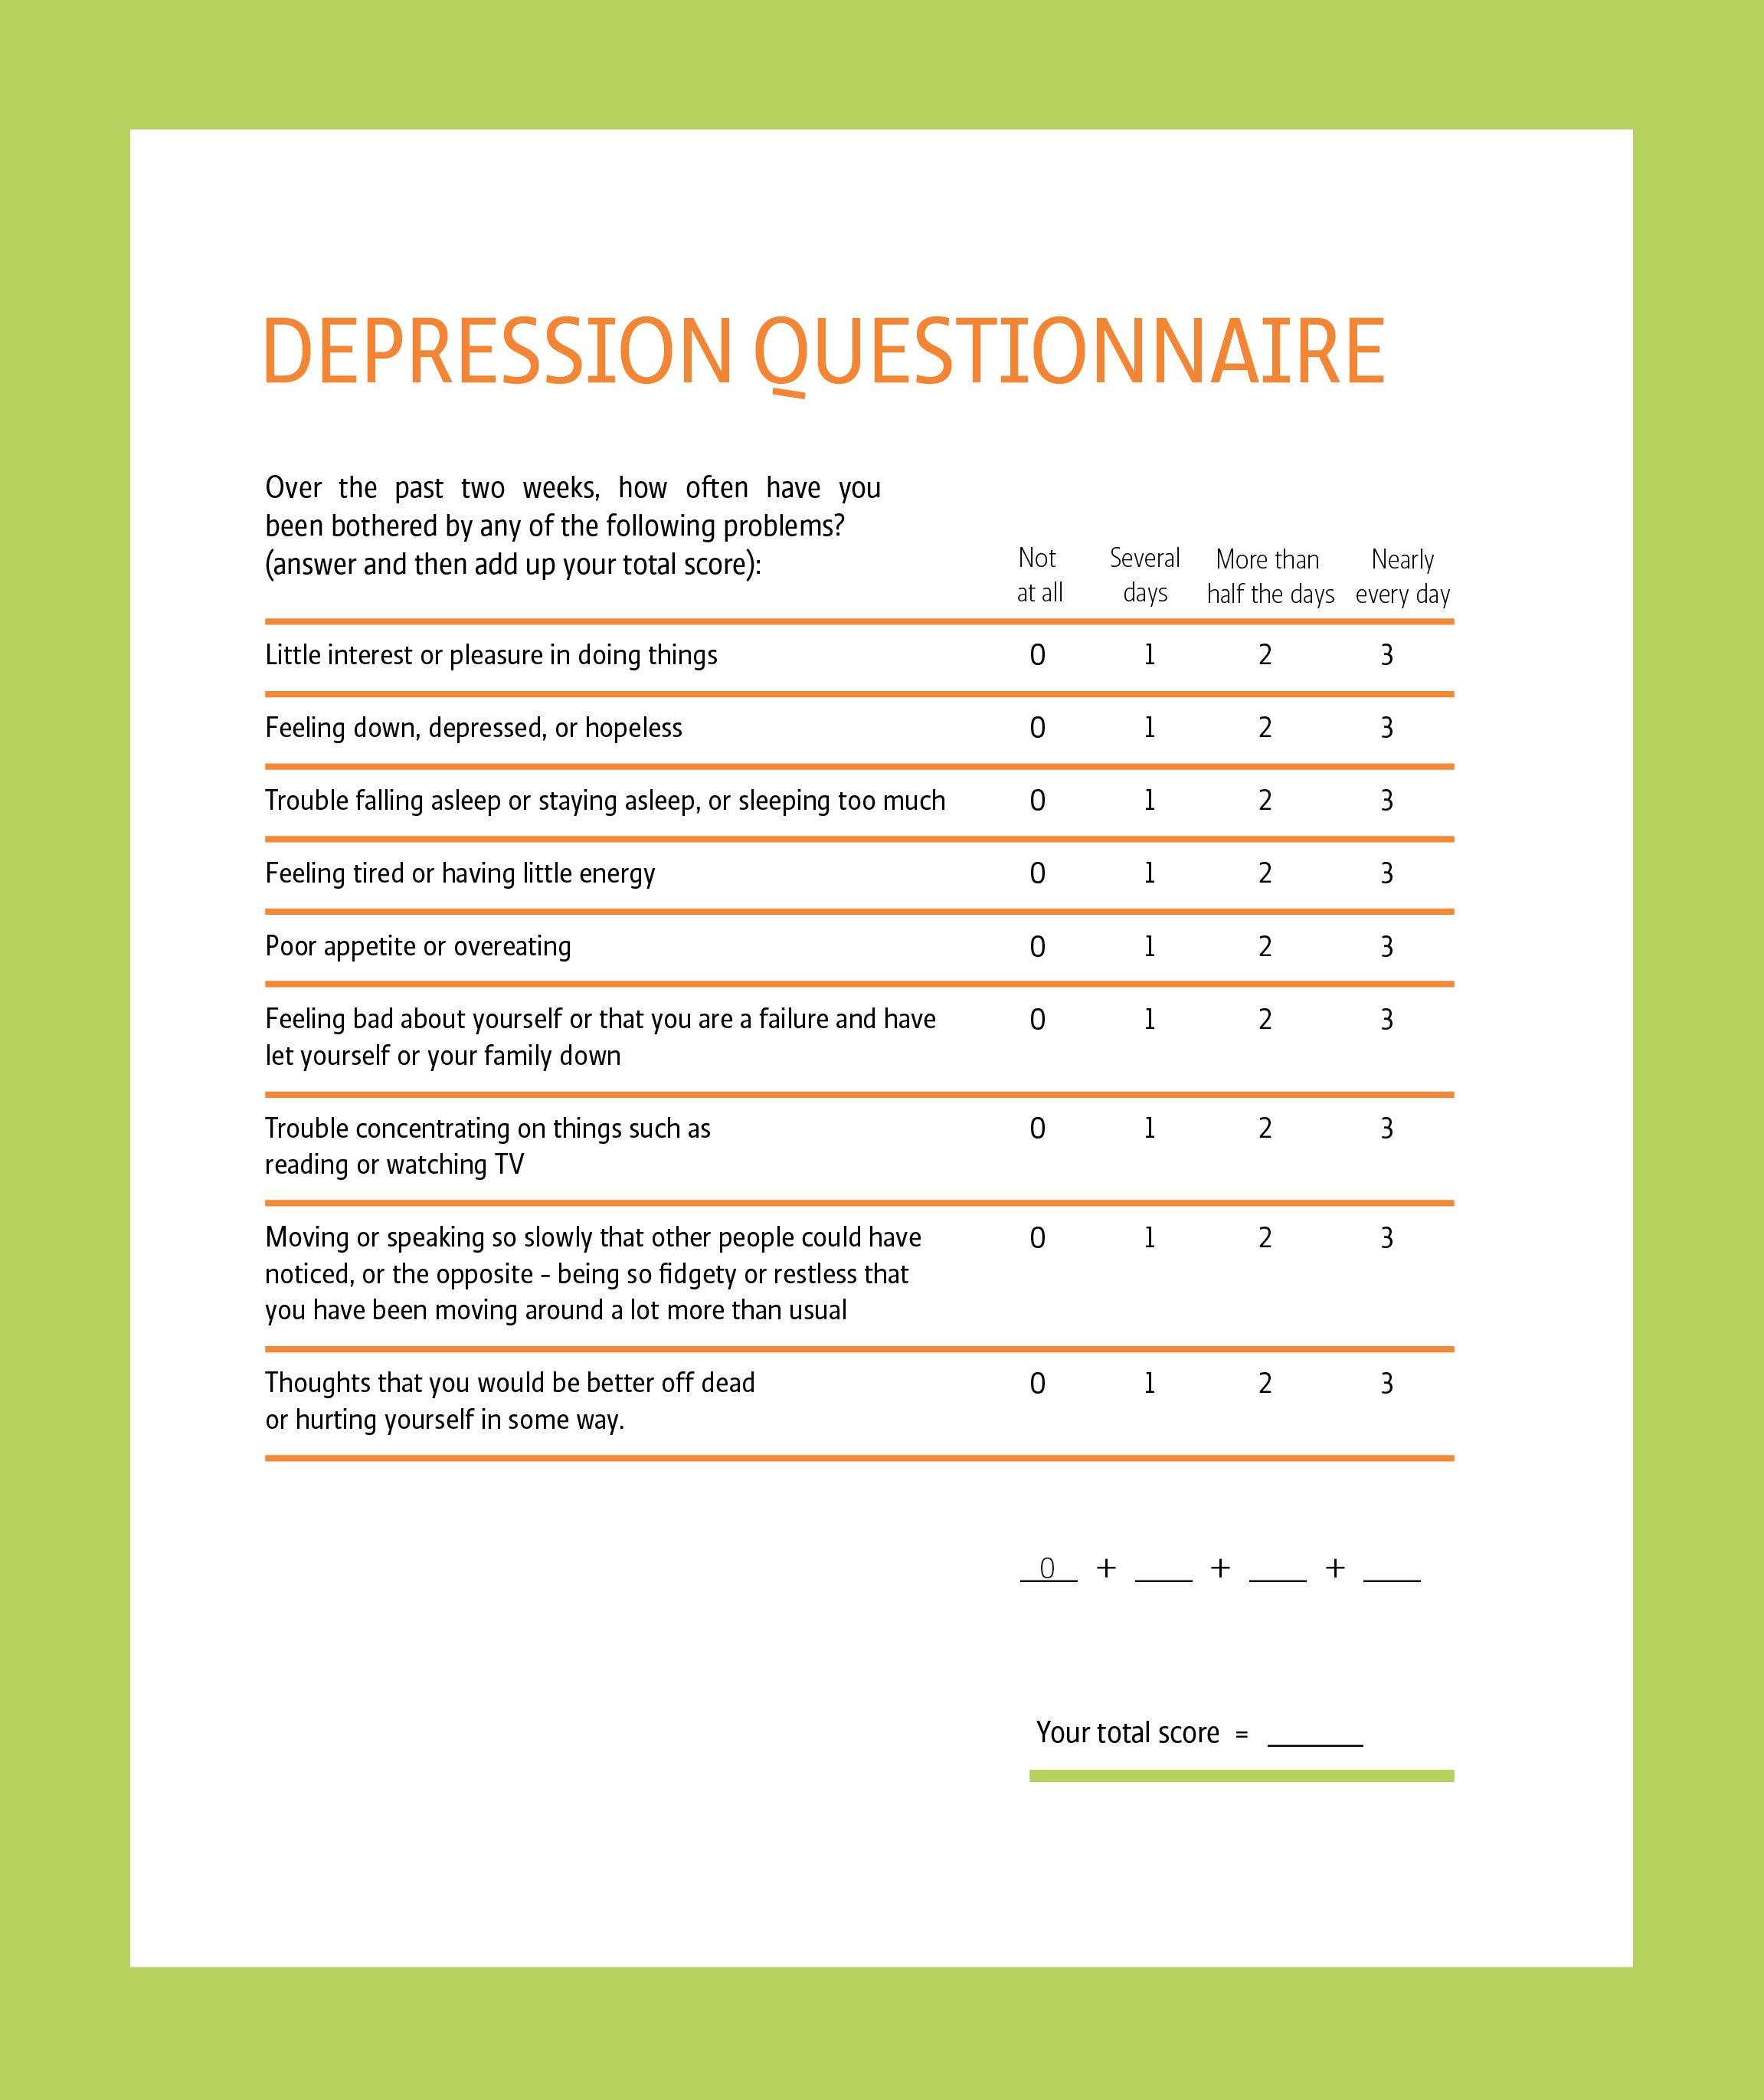 DepressionQuestionnaire